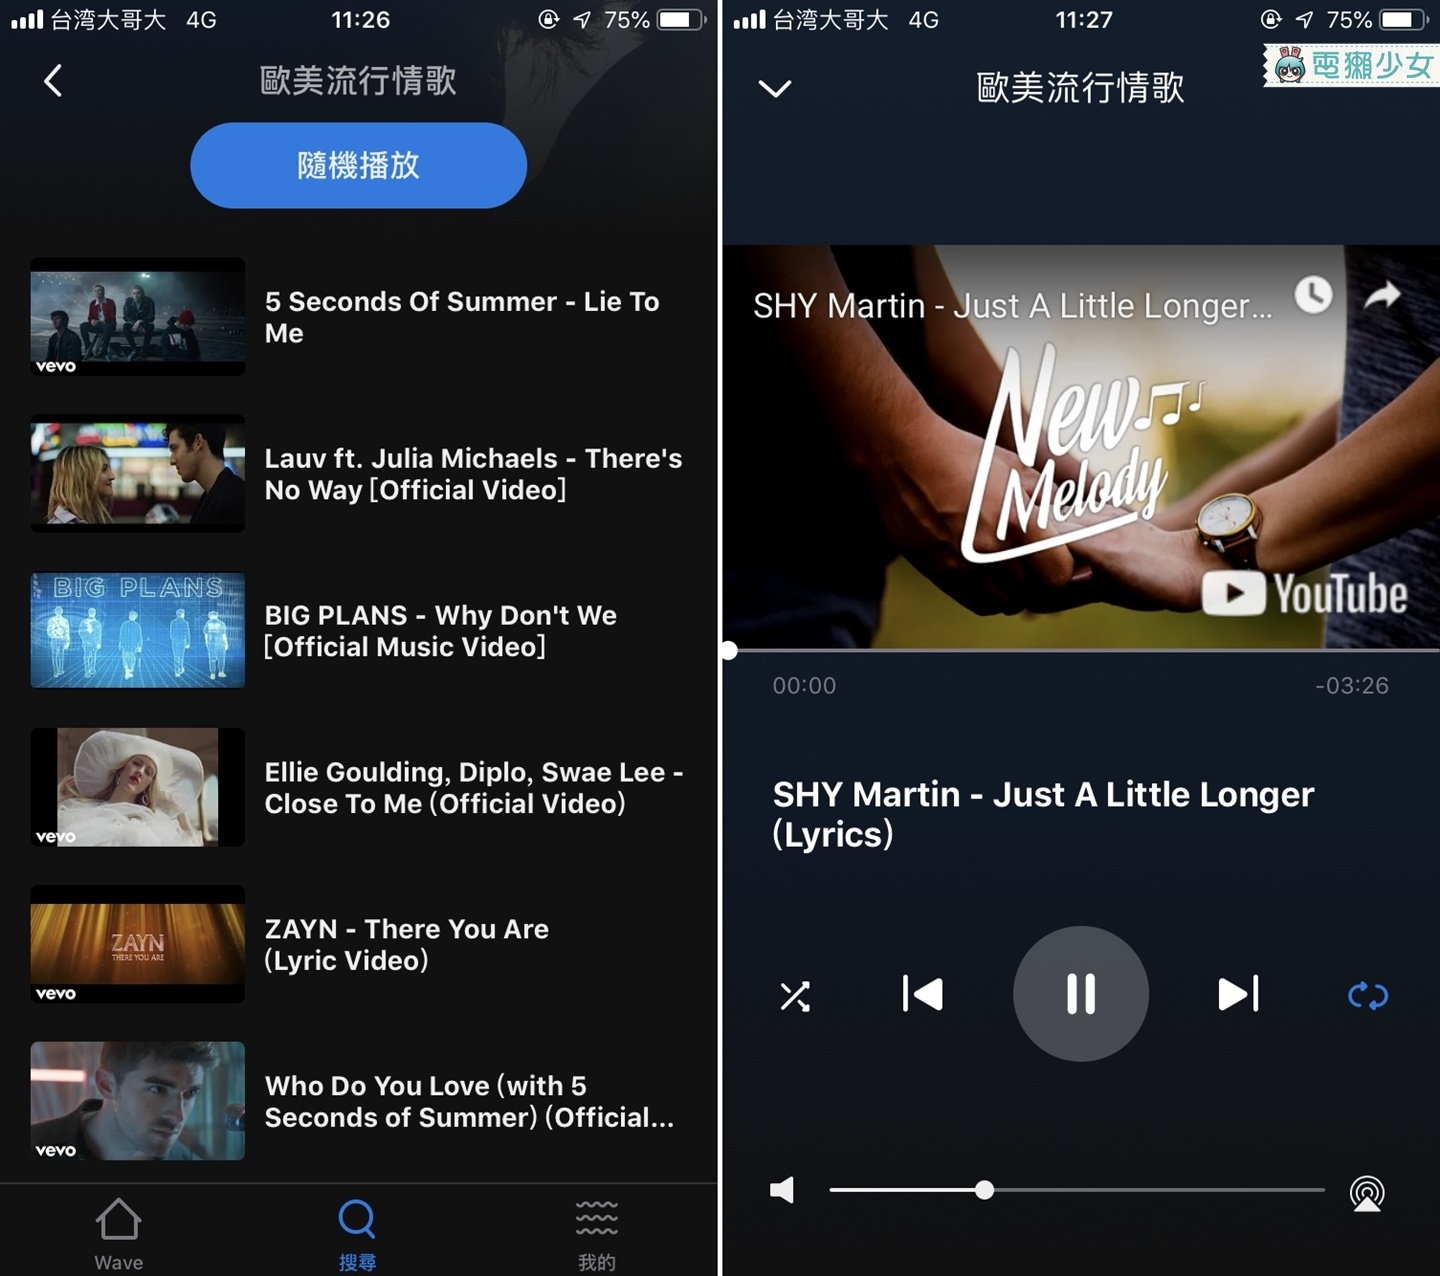 2019最新版：背景播放YouTube聽音樂『 WAVE 』還能匯入你的YouTube播放清單｜Android / iOS (更新：App已失效)